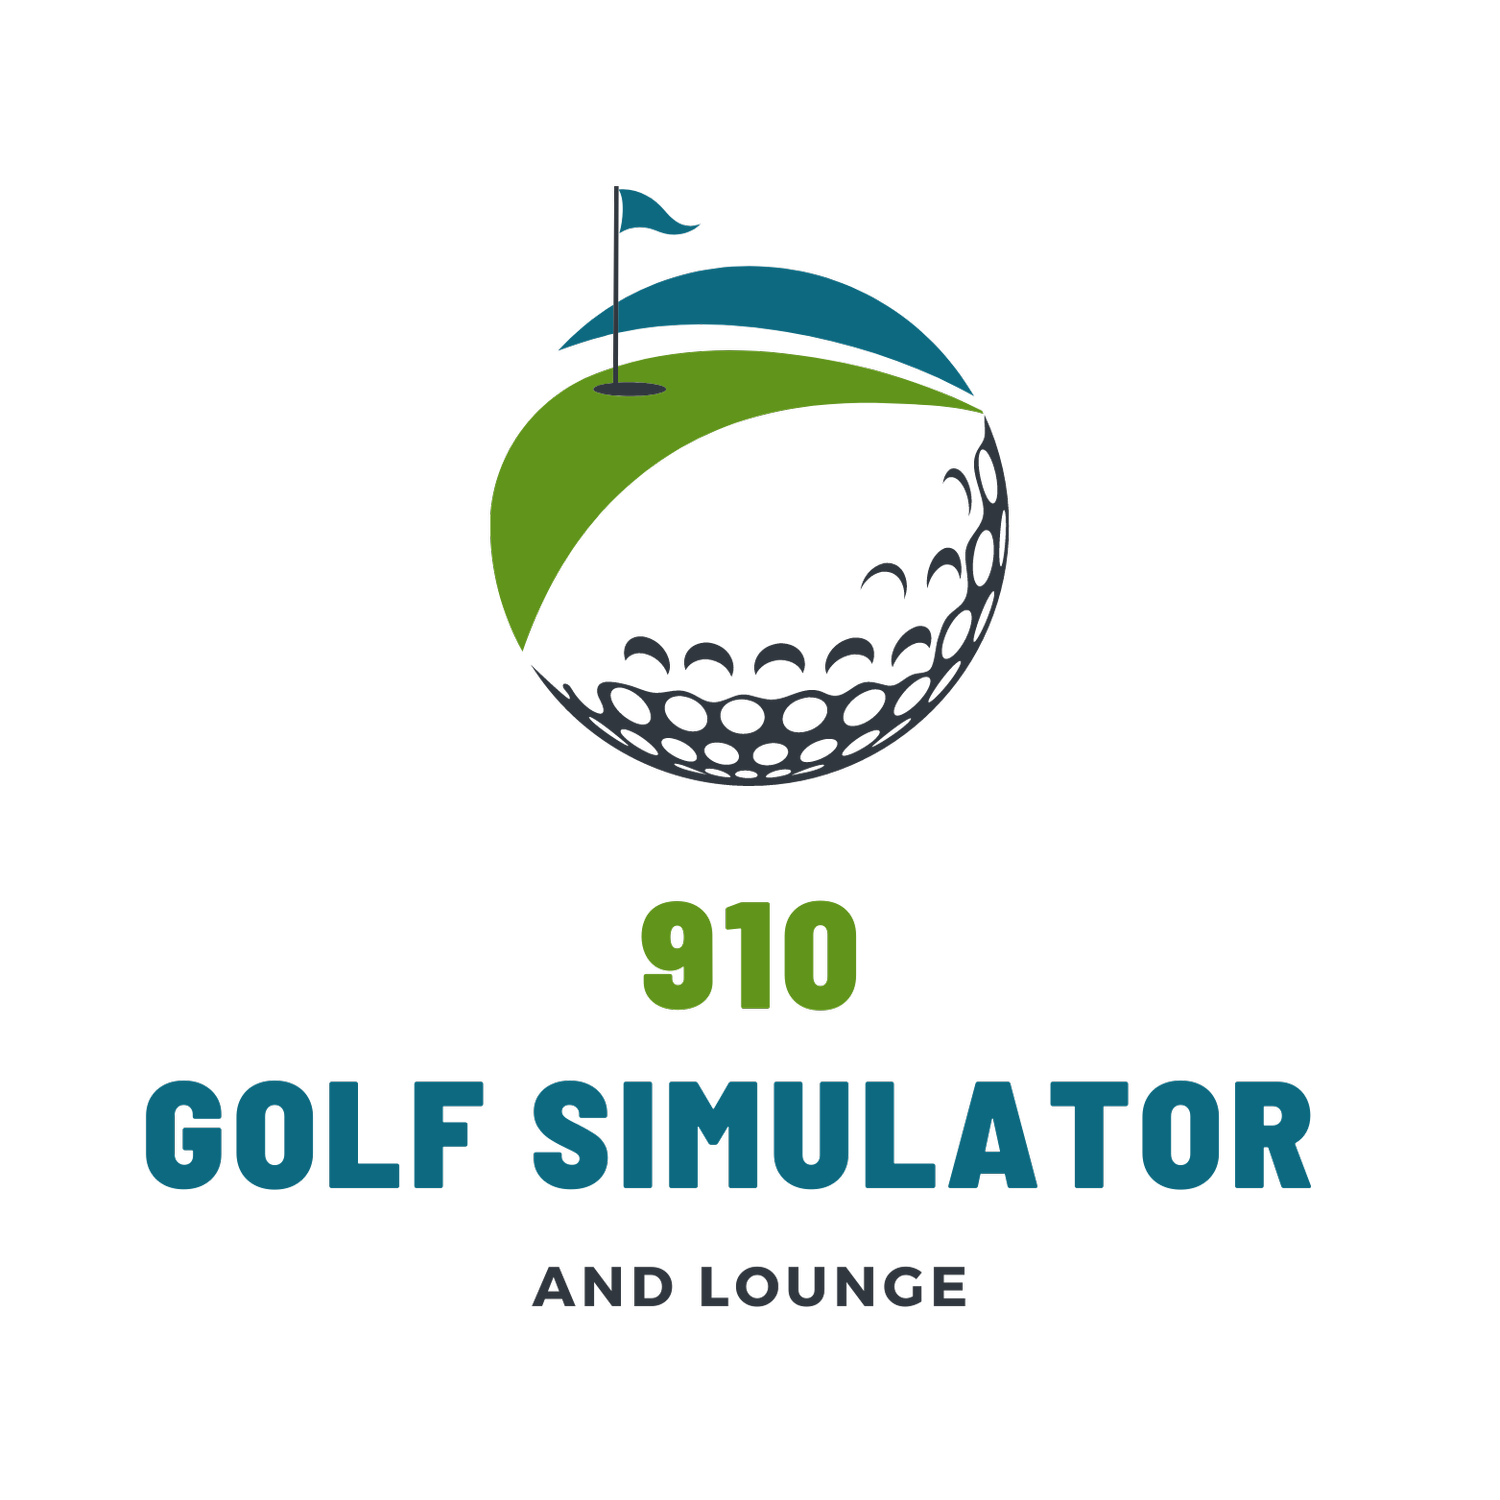 910 Golf Simulator and Lounge